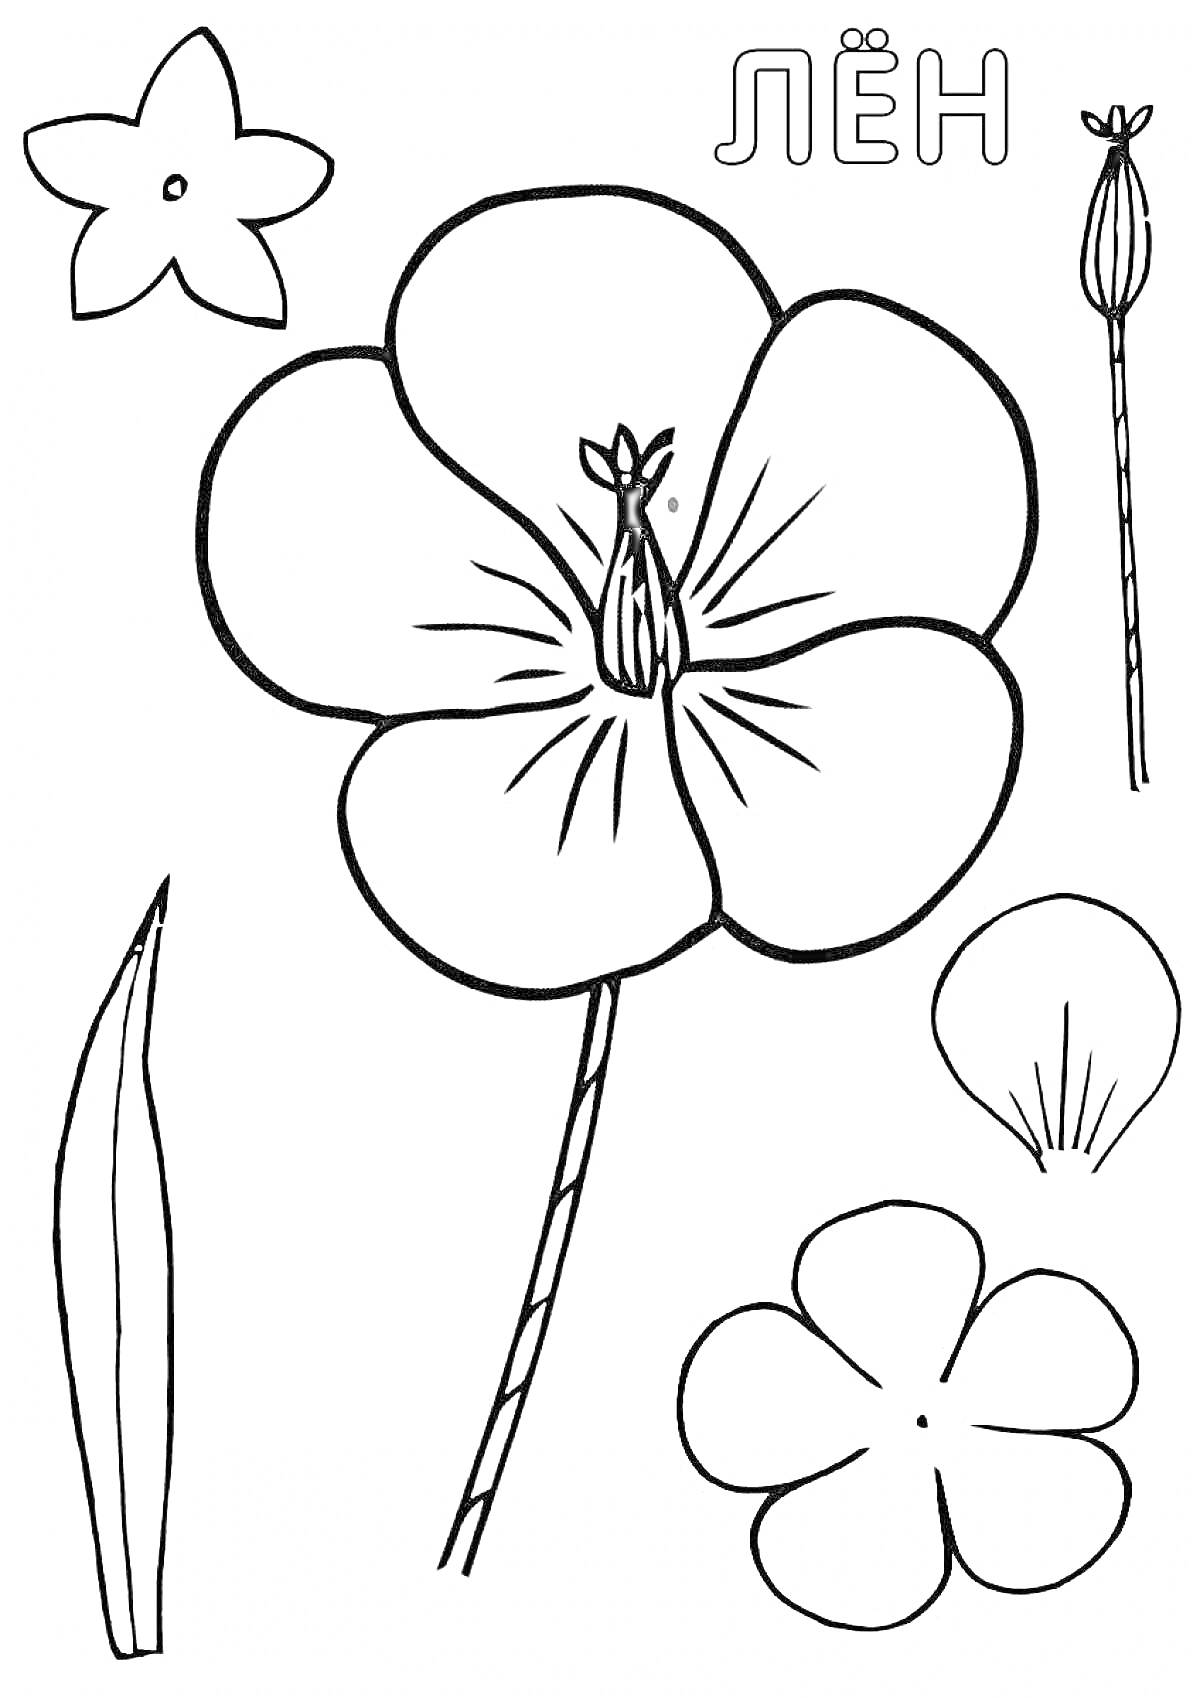 Раскраска Лен - цветы, бутоны и лист лена